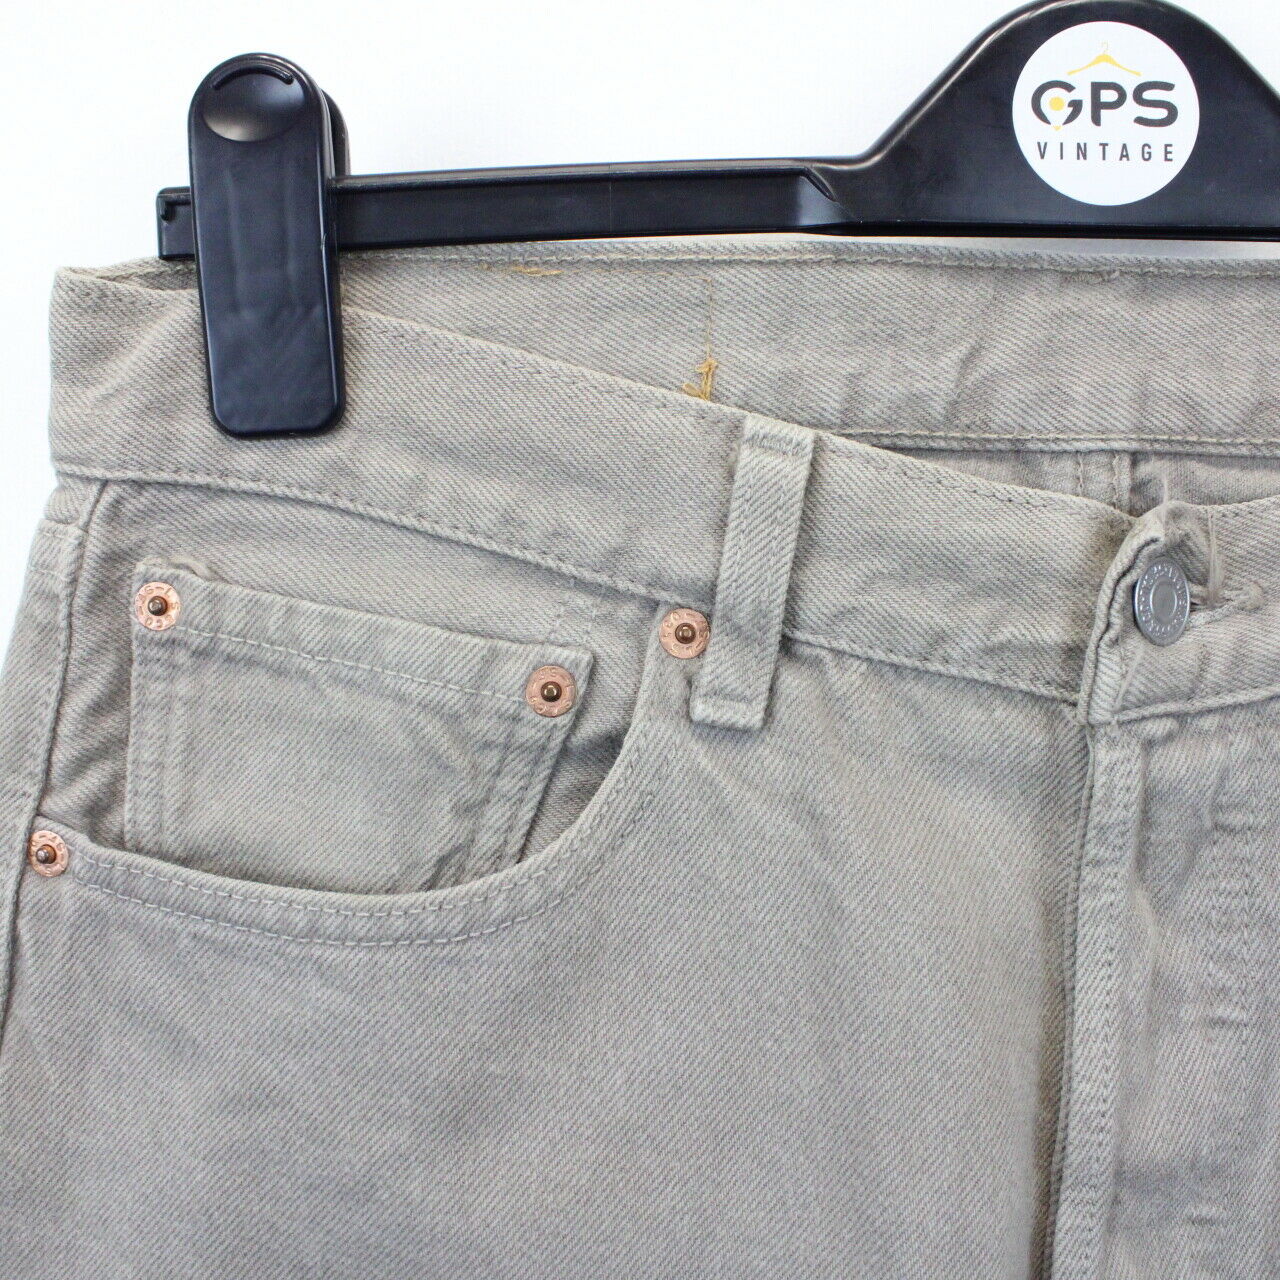 LEVIS 501 Jeans Grey | W33 L26